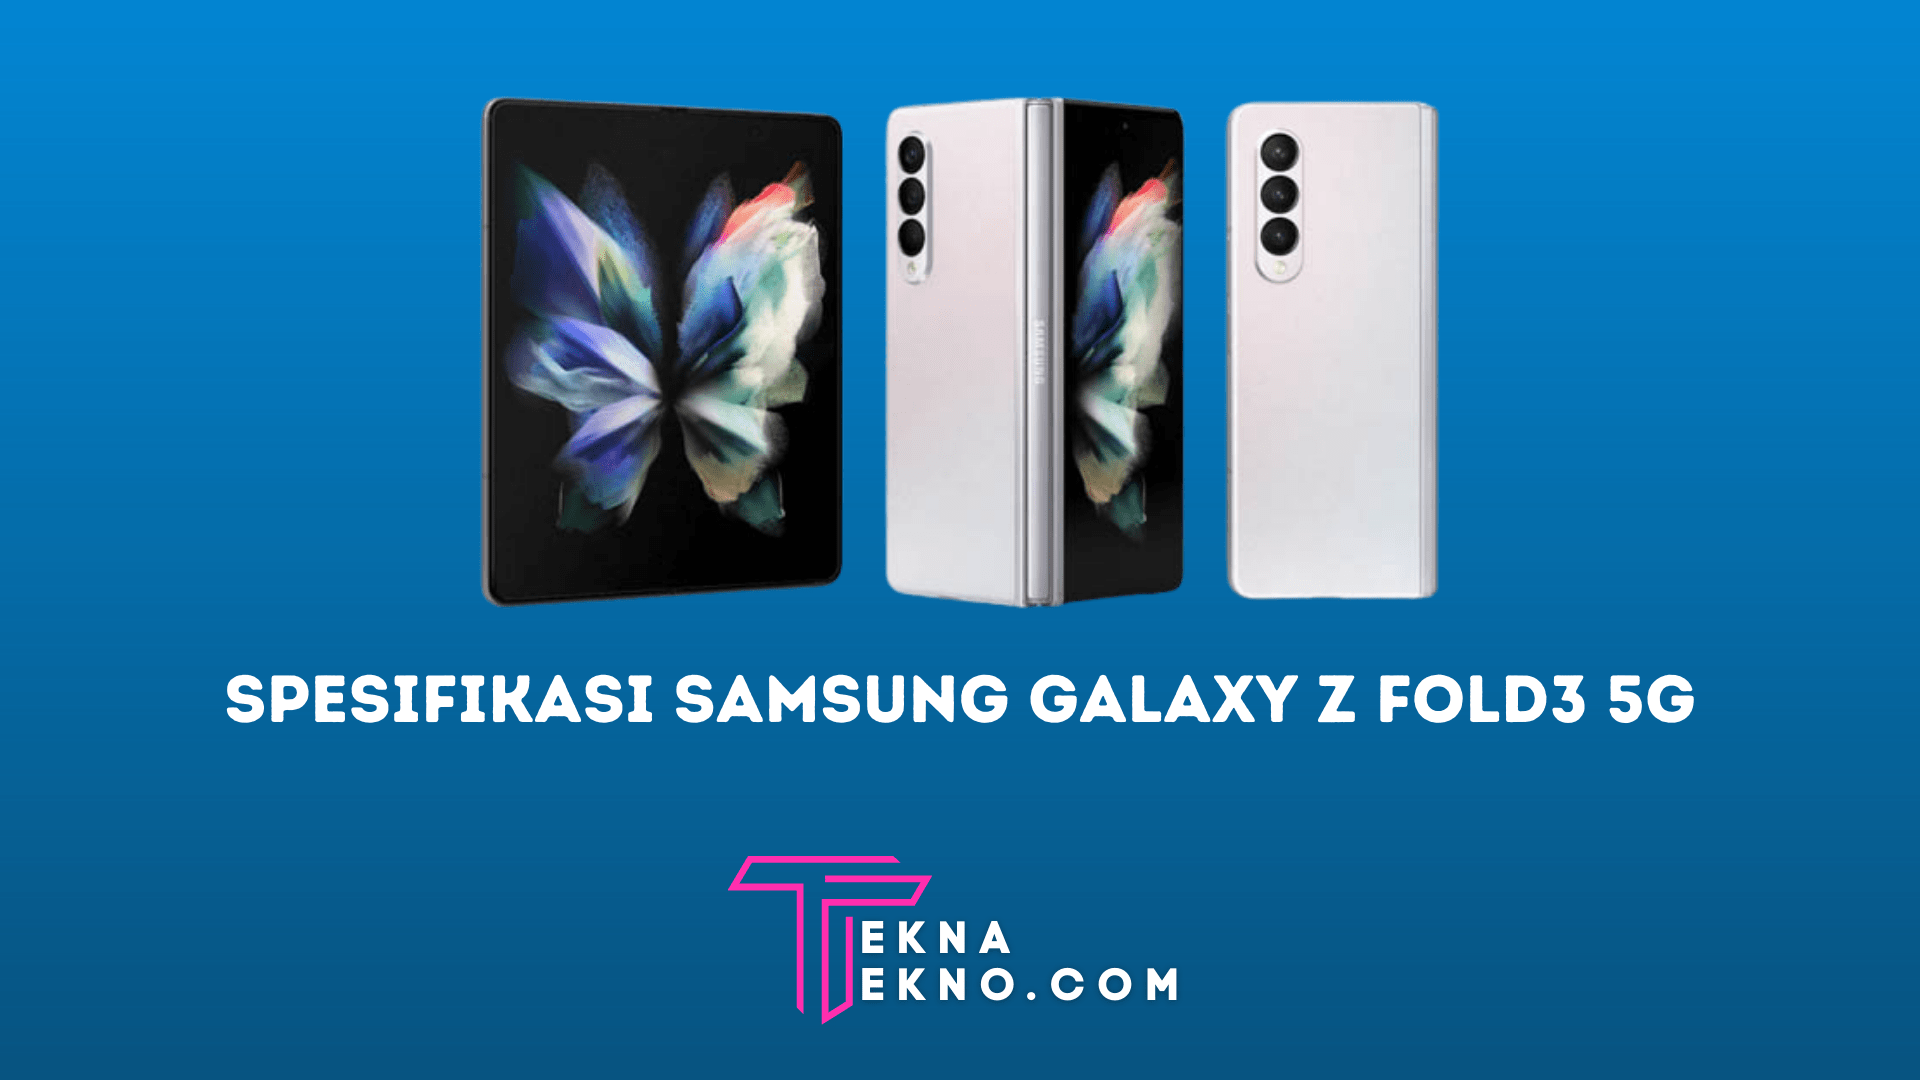 Samsung Galaxy Z Fold3 5G: Spesifikasi dan Harga Terbaru